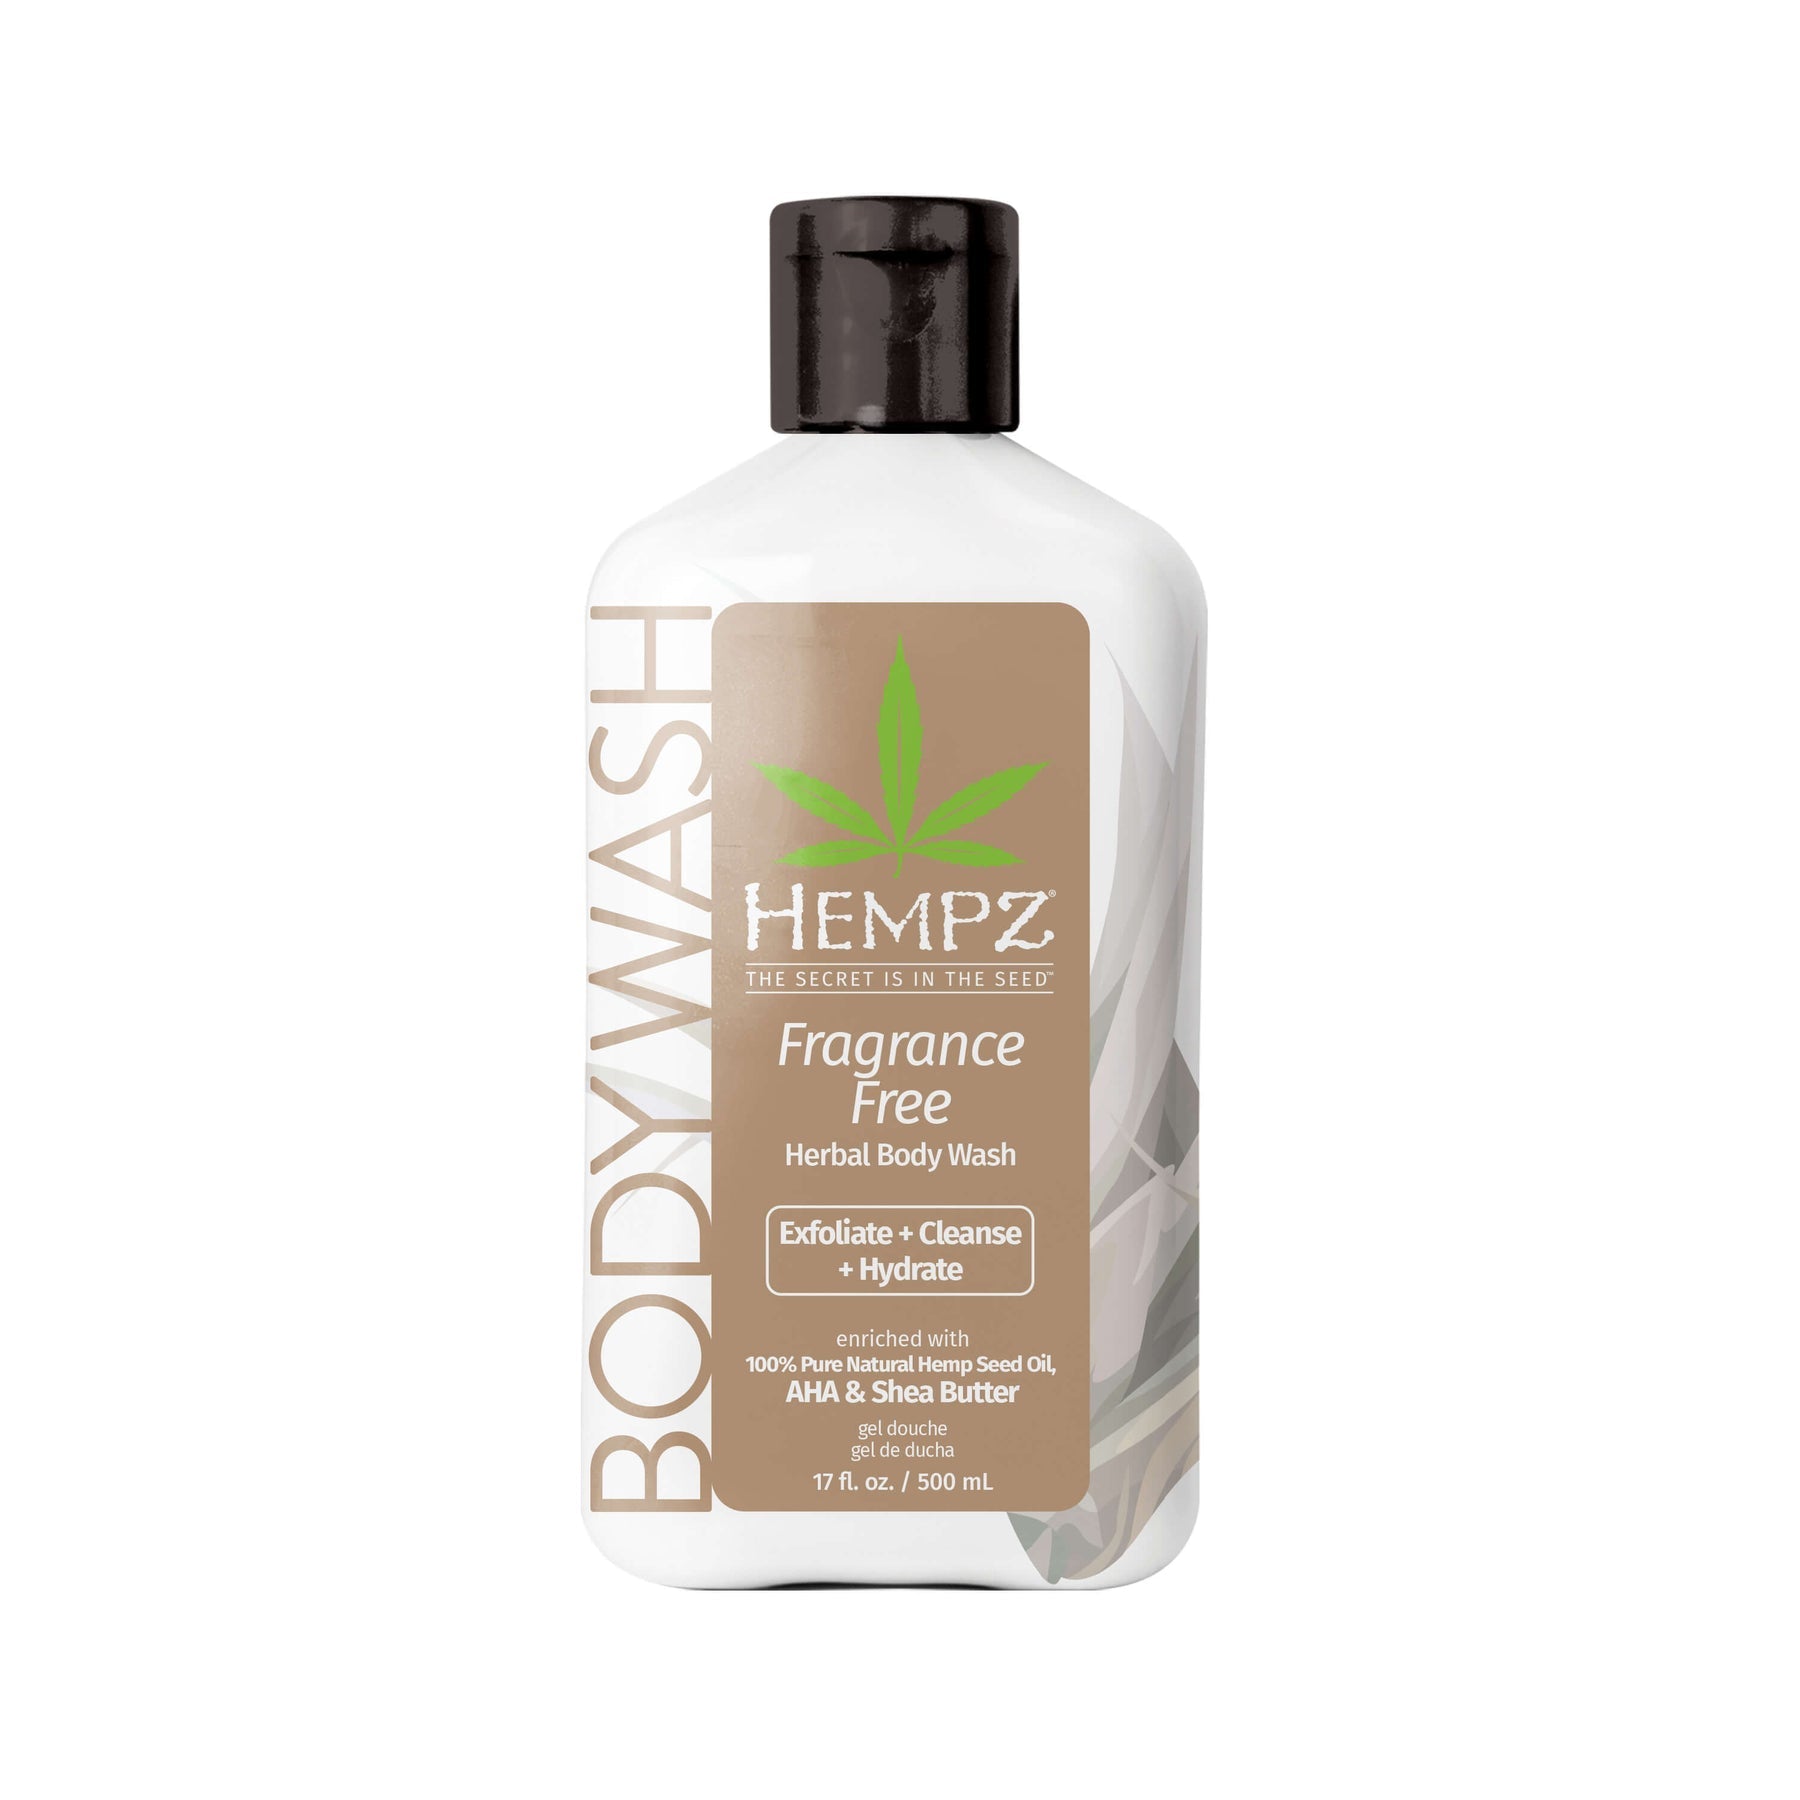 Hempz - Fragrance Free Herbal Body Wash - Creata Beauty - Professional Beauty Products